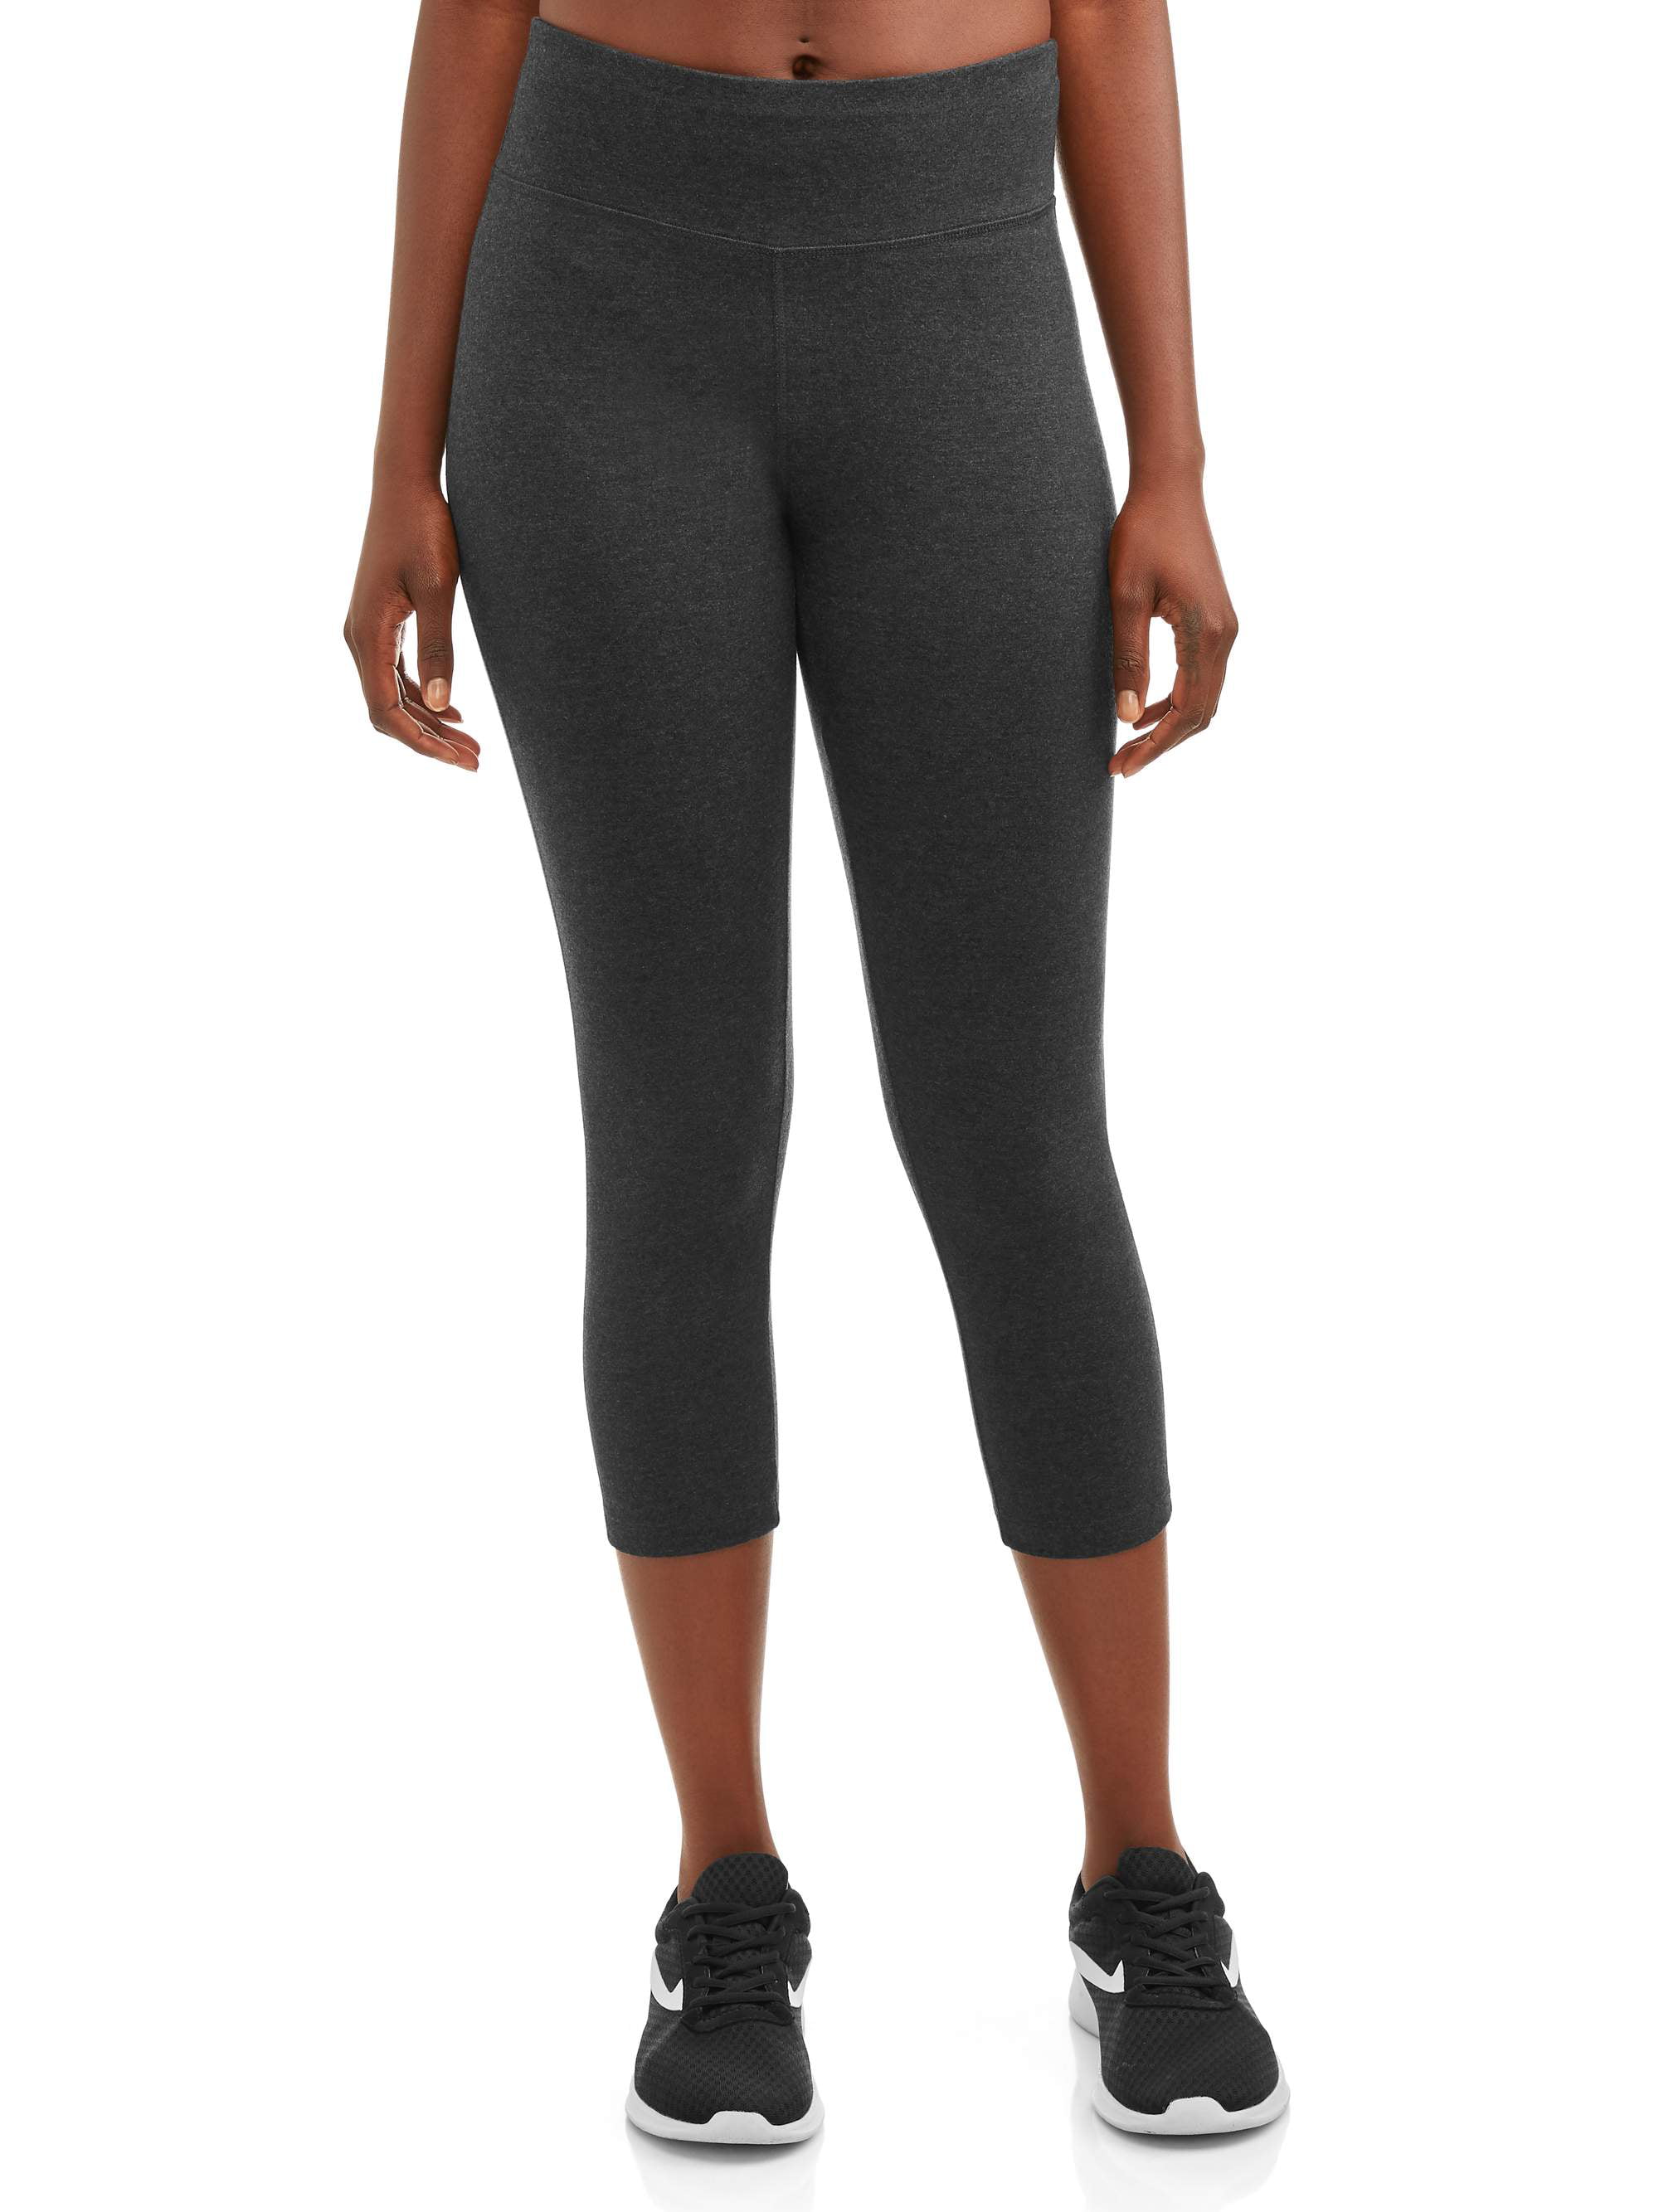 Women Yoga Sweat Pants Spandex Cotton Sports Fitness Capri Leggings Gray M 